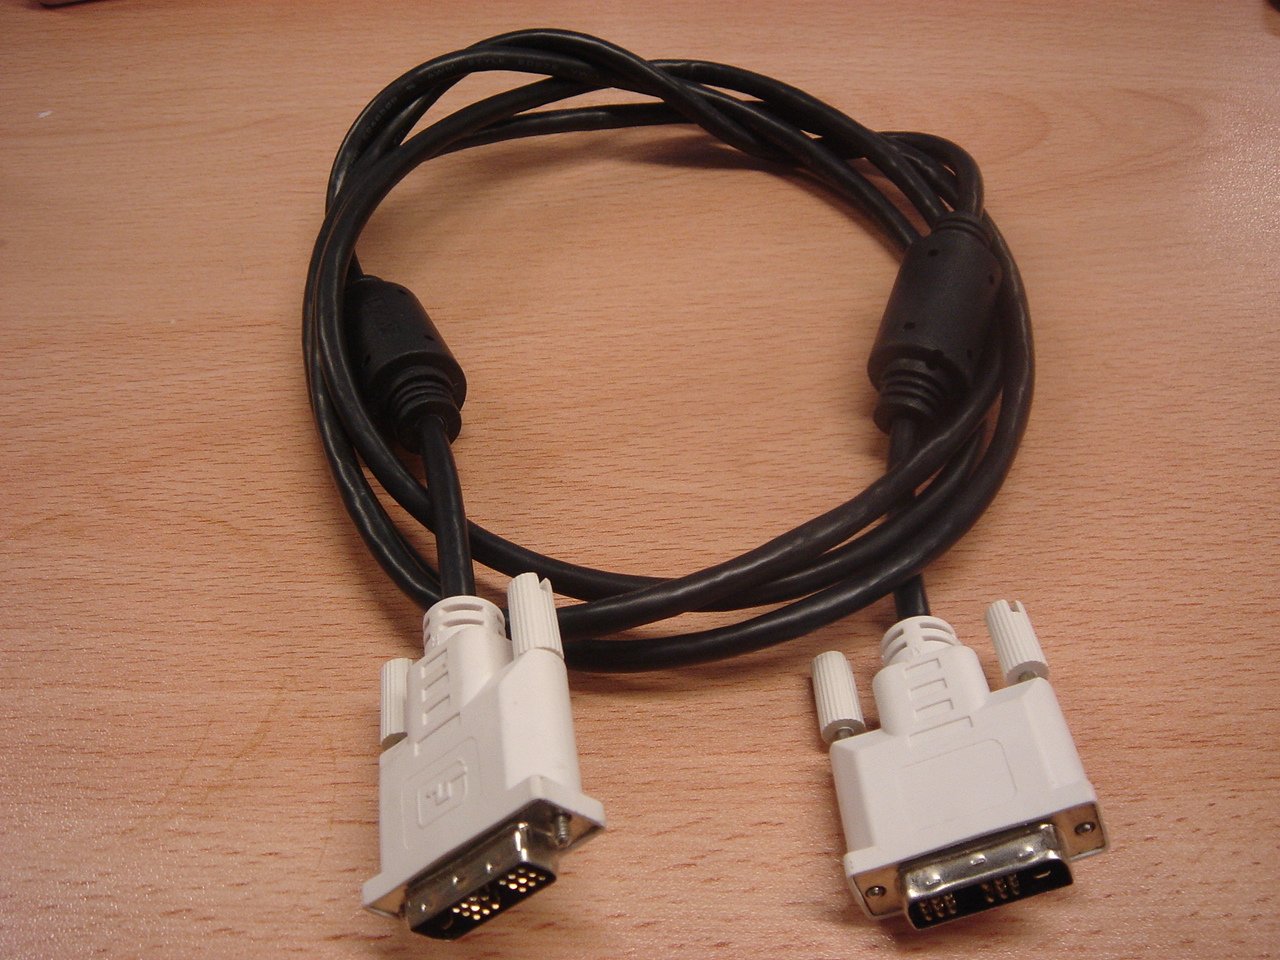 DV-106 - 2m DVI Male to DVI Male Cable - Refurbished